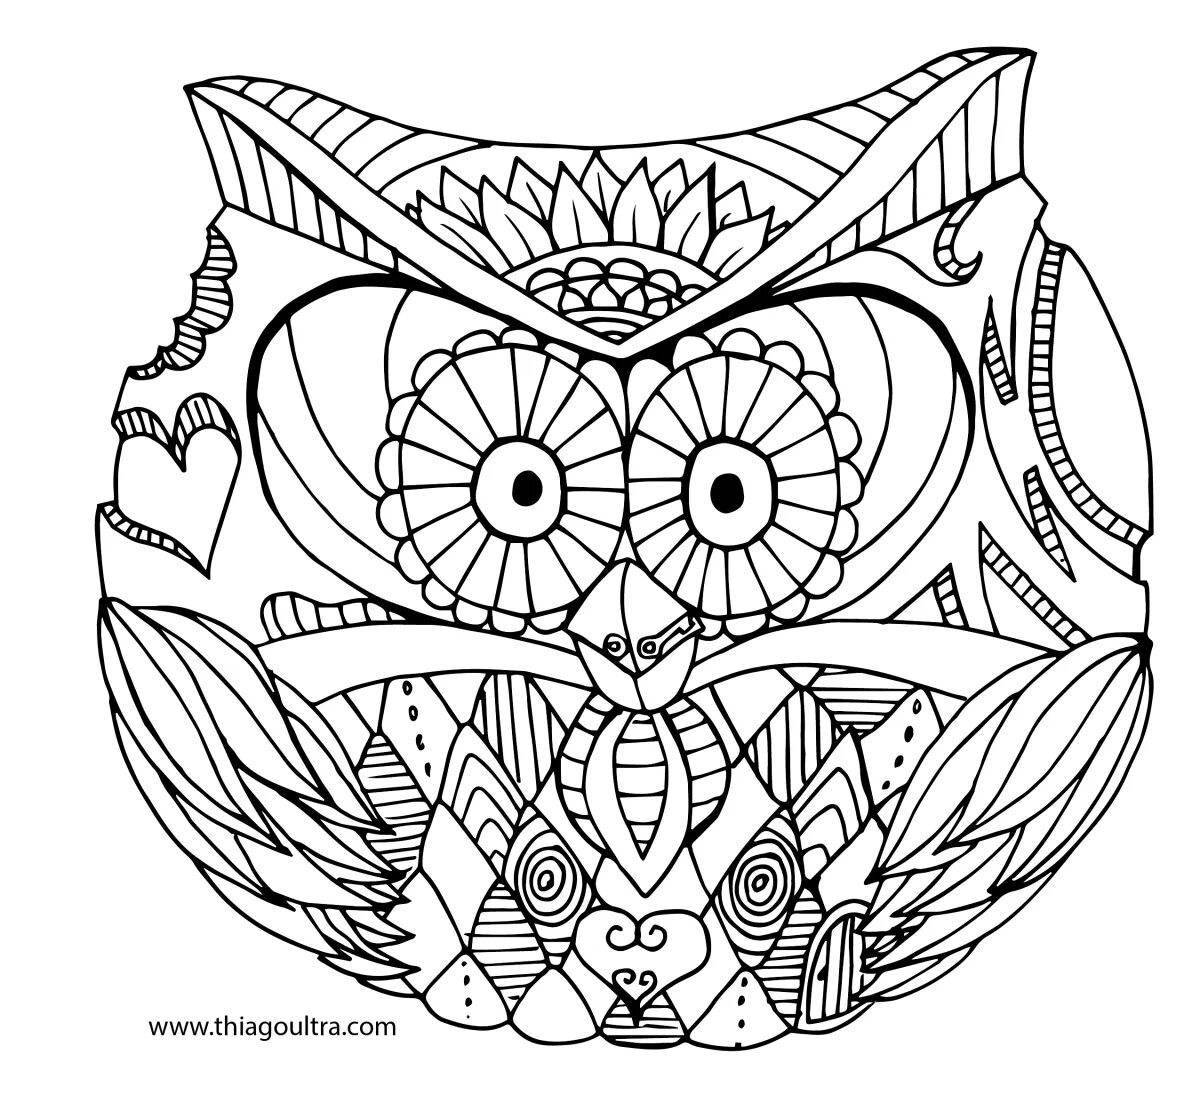 Coloring majestic anti-stress owls